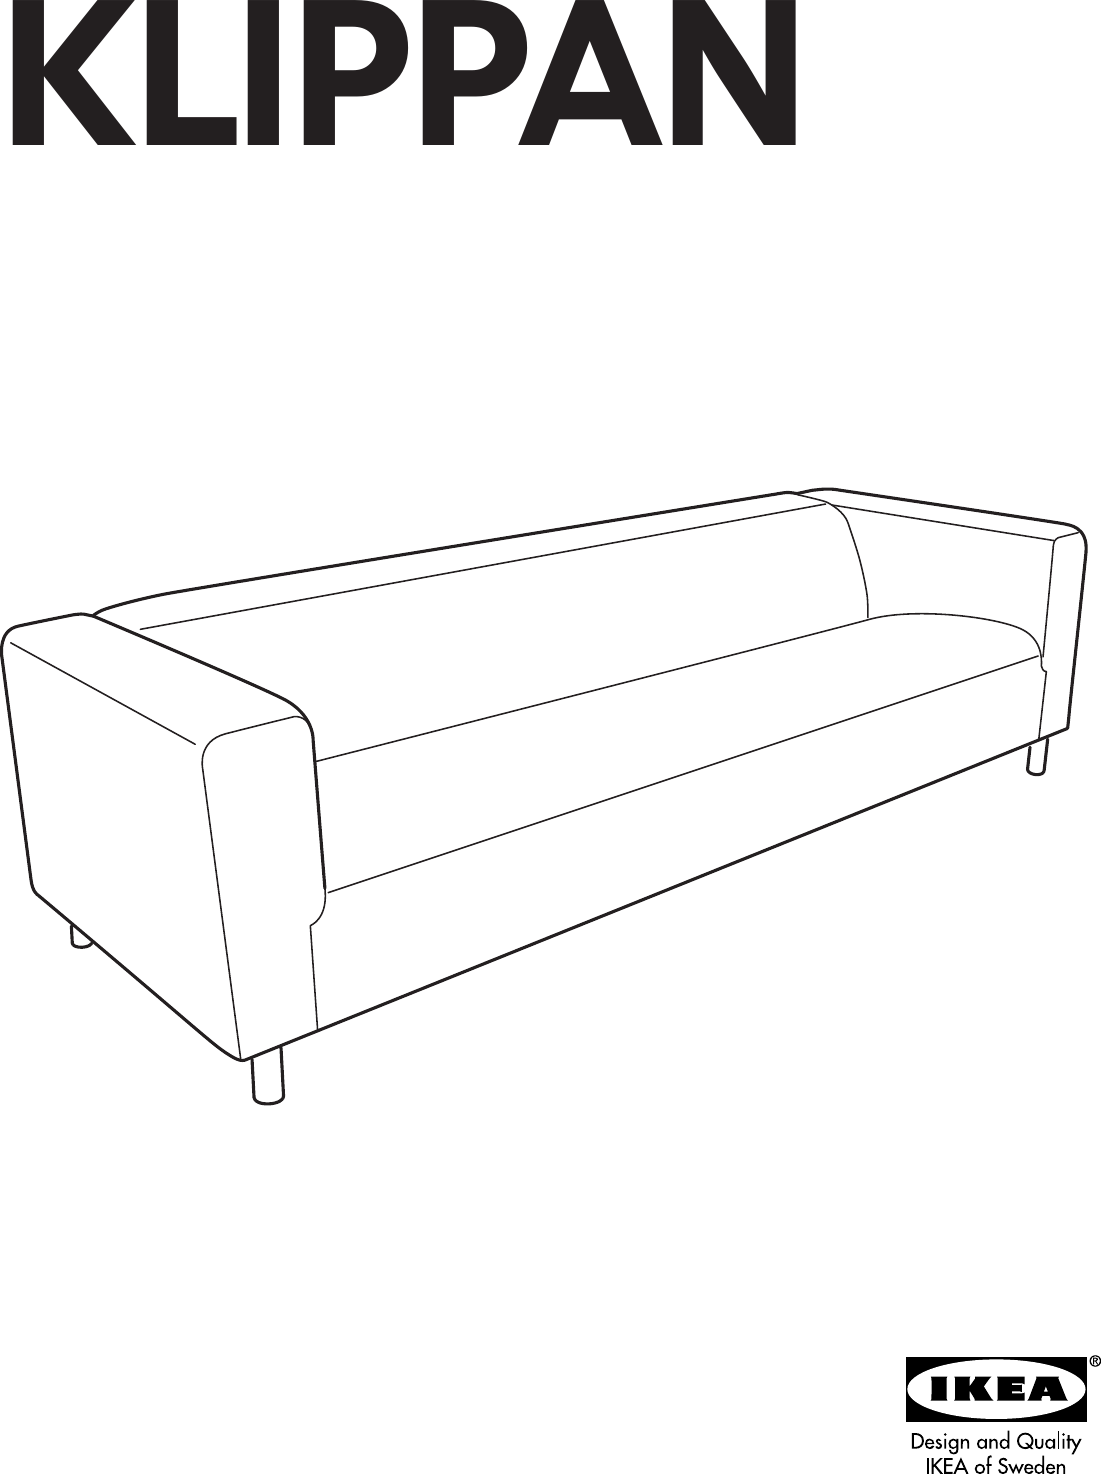 Ikea Klippan 4 Seat Sofa Frame Assembly Instruction